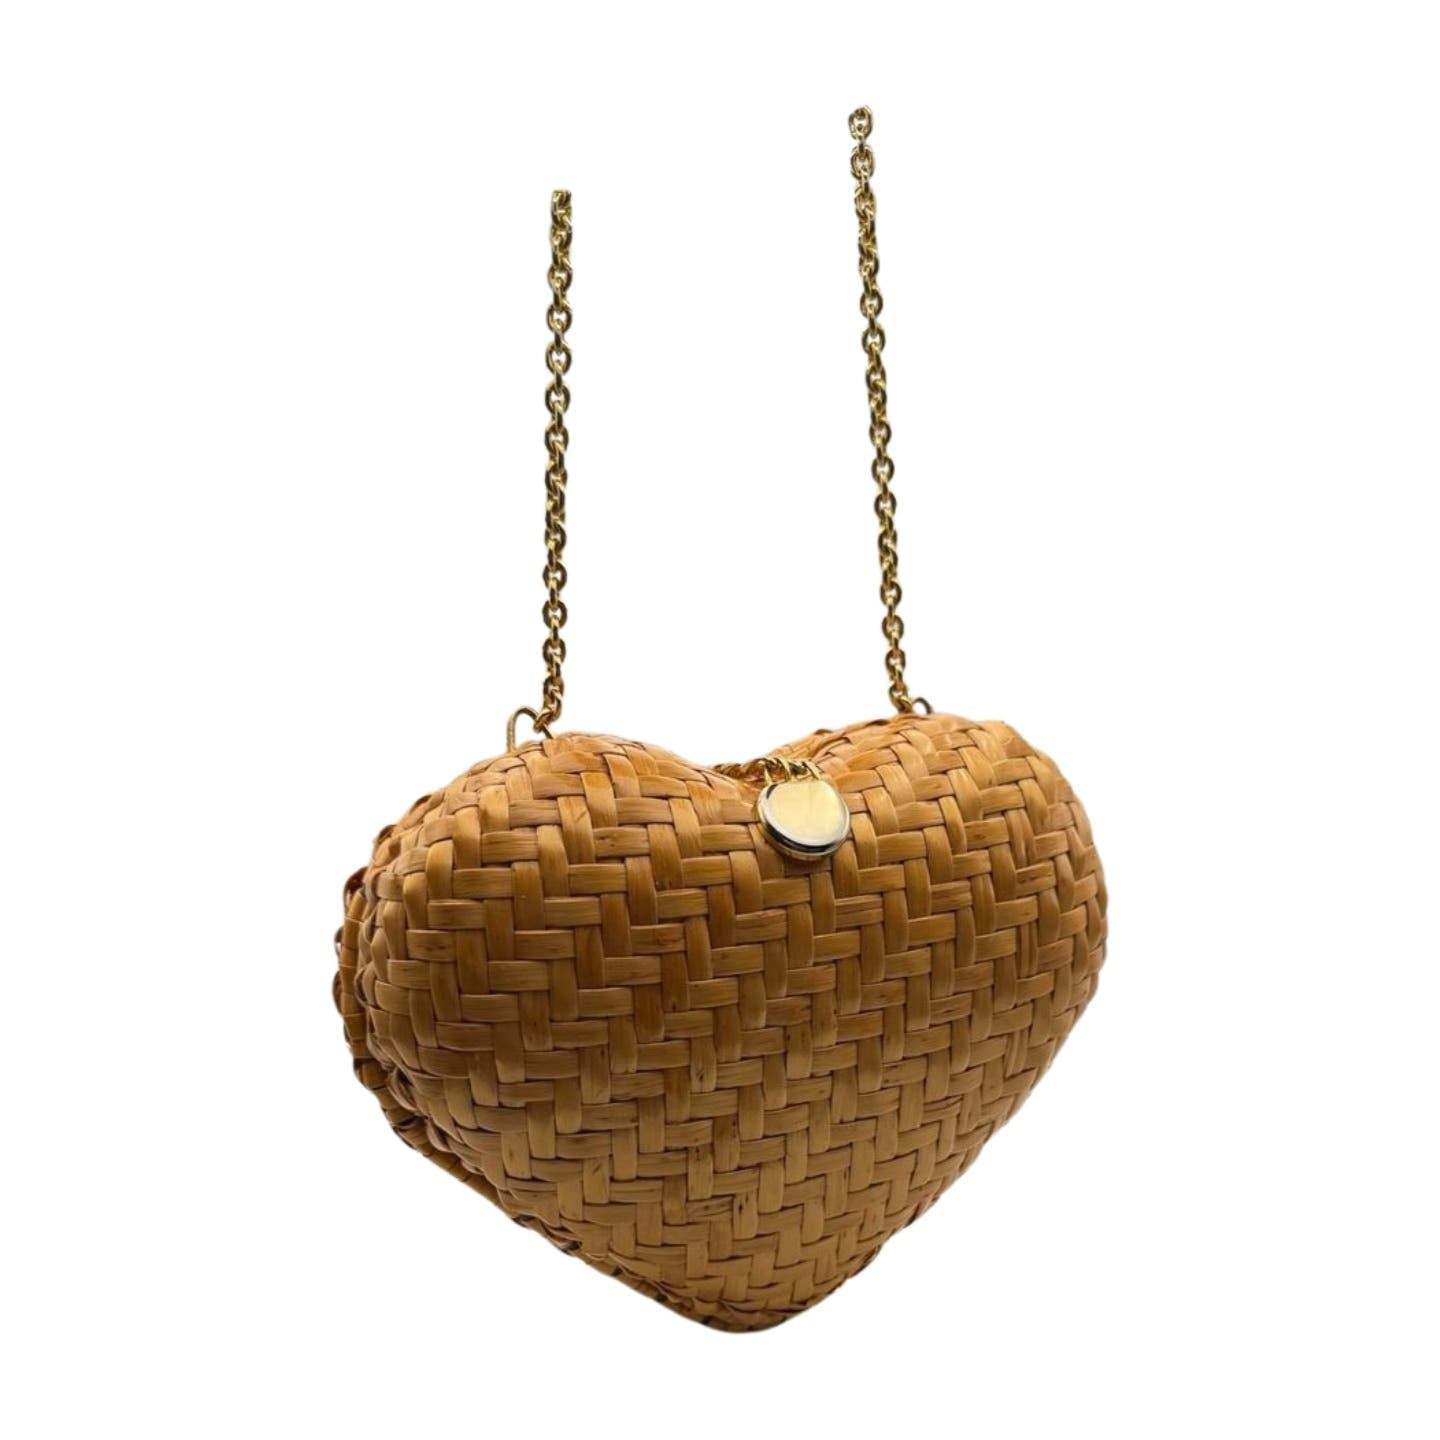 Courrèges Wicker Heart Bag - Le Look